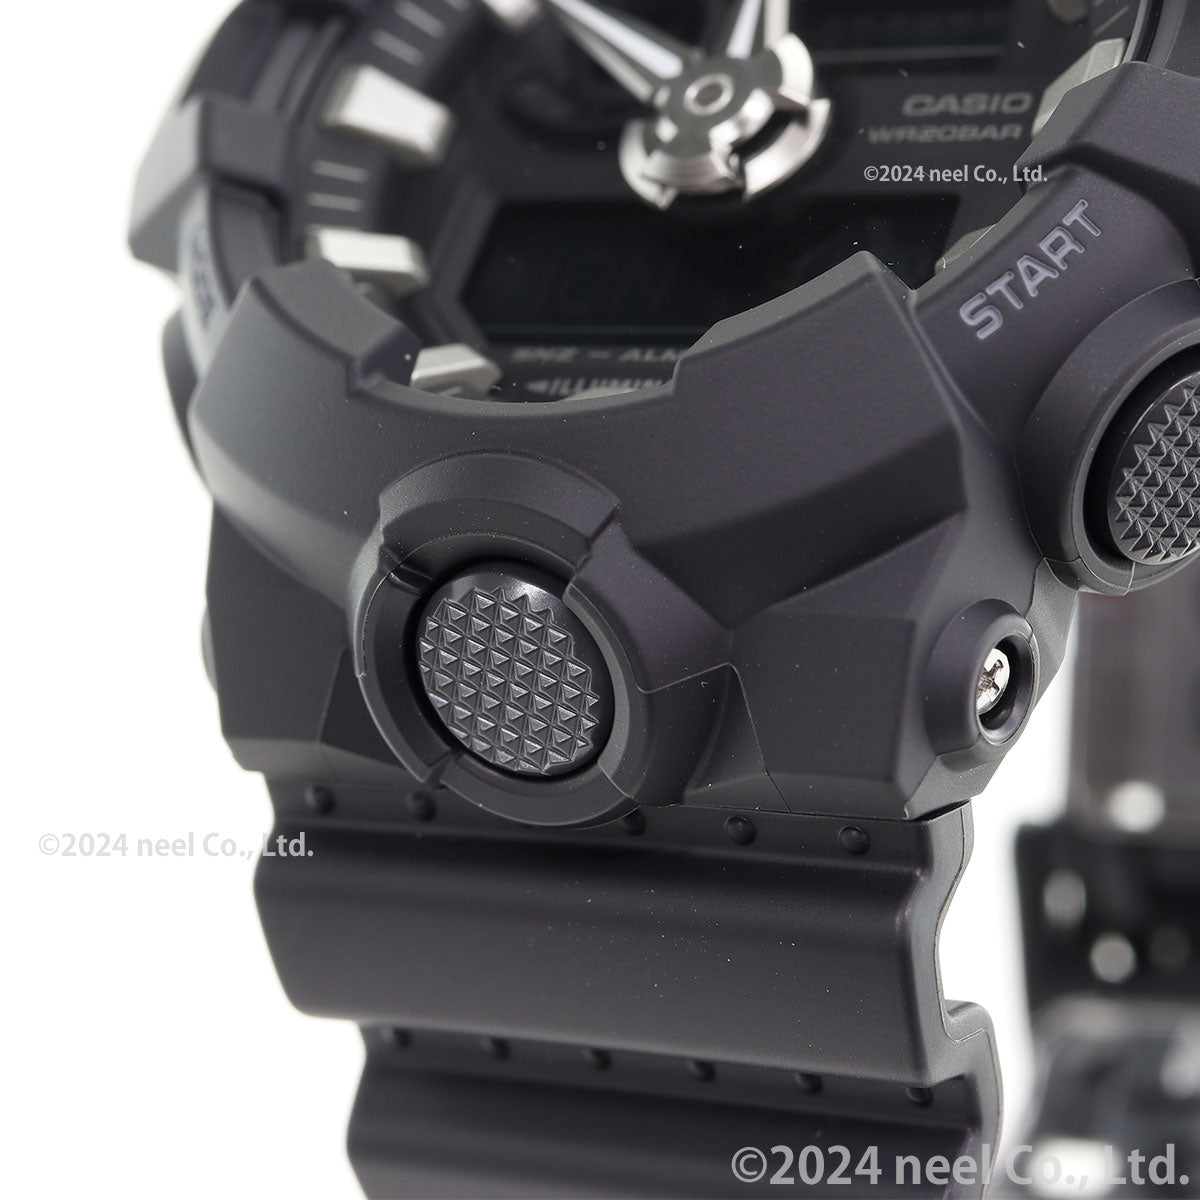 G-SHOCK ブラック 腕時計 メンズ アナデジ GA-700-1BJF【正規品】